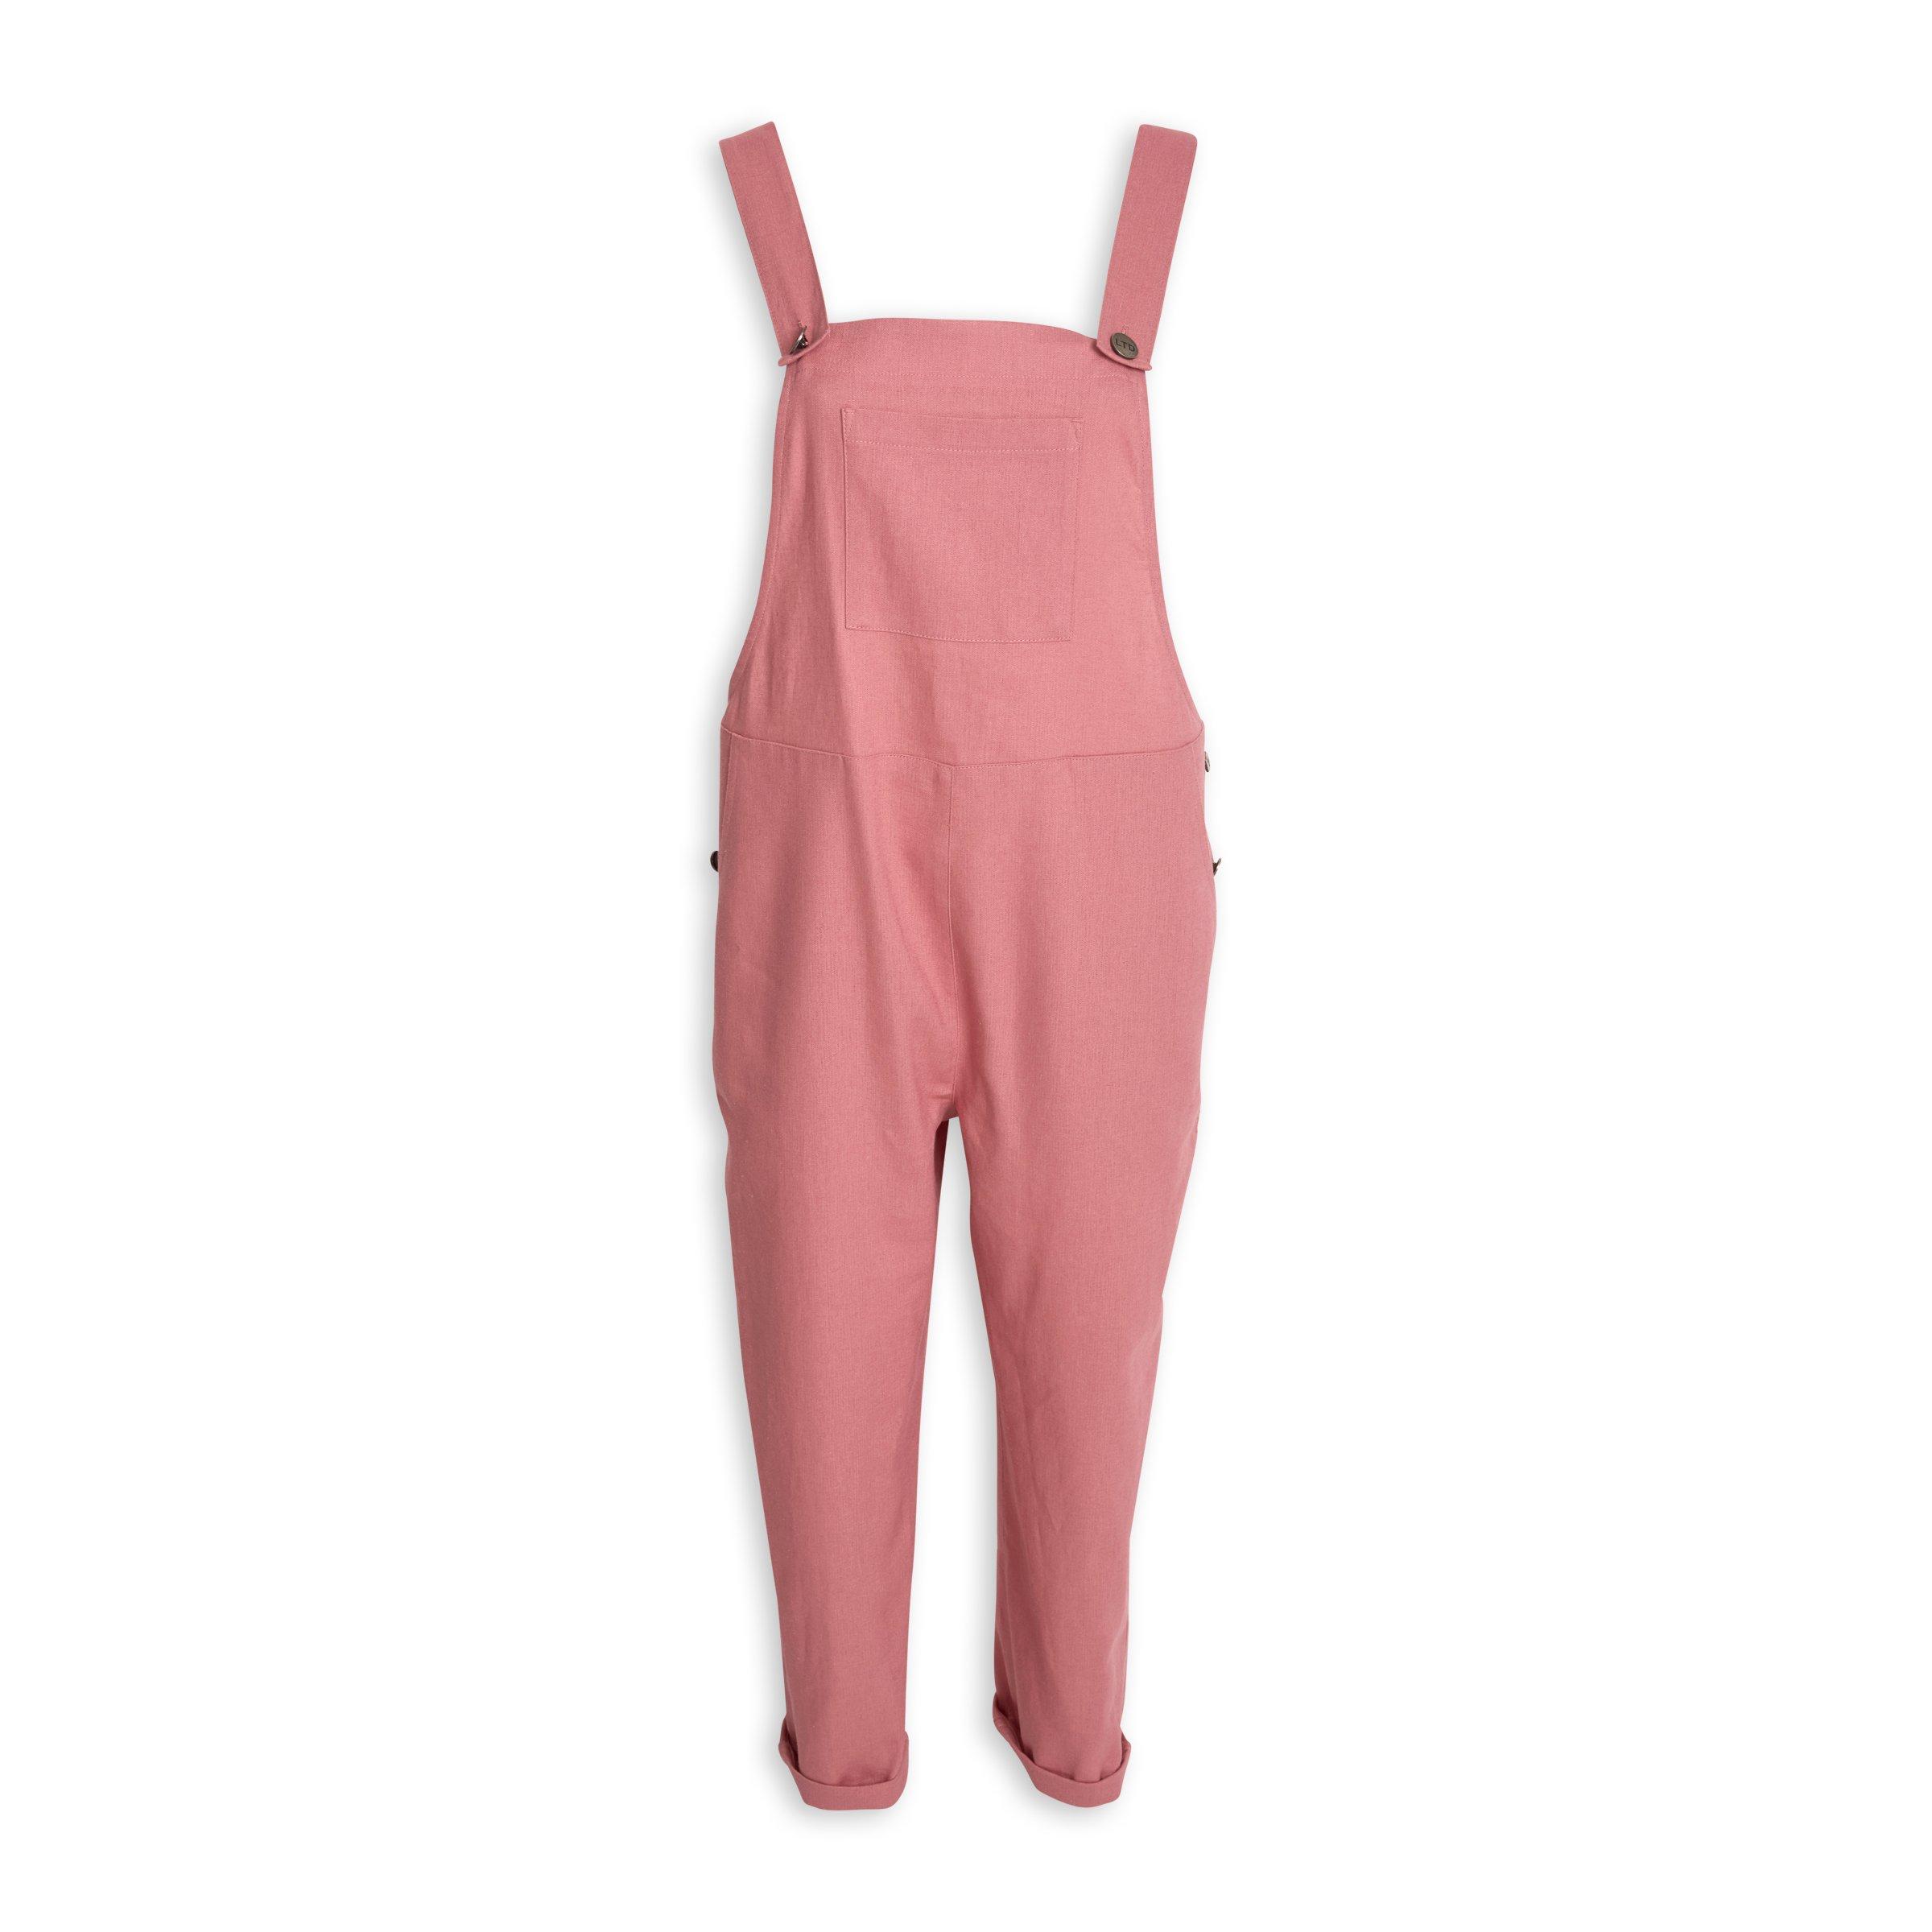 Buy LTD Woman Pink Linen Dungaree Online | Truworths